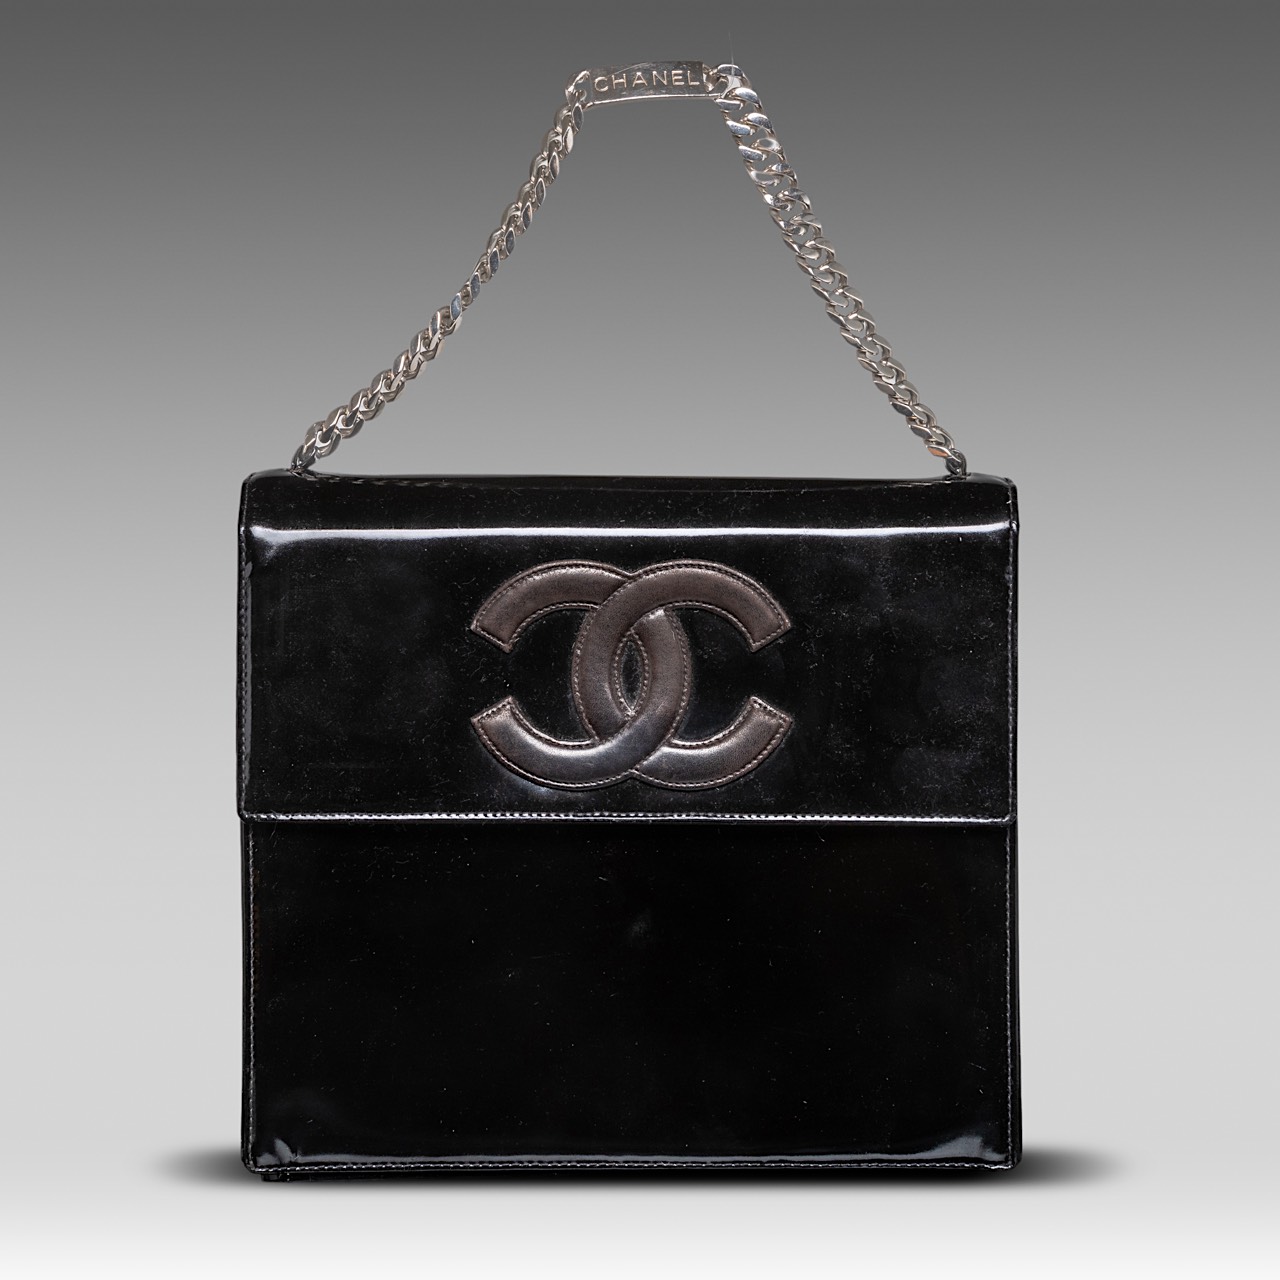 A Chanel flap handbag in black patent leather, H 22 - W 25 - D 8 cm